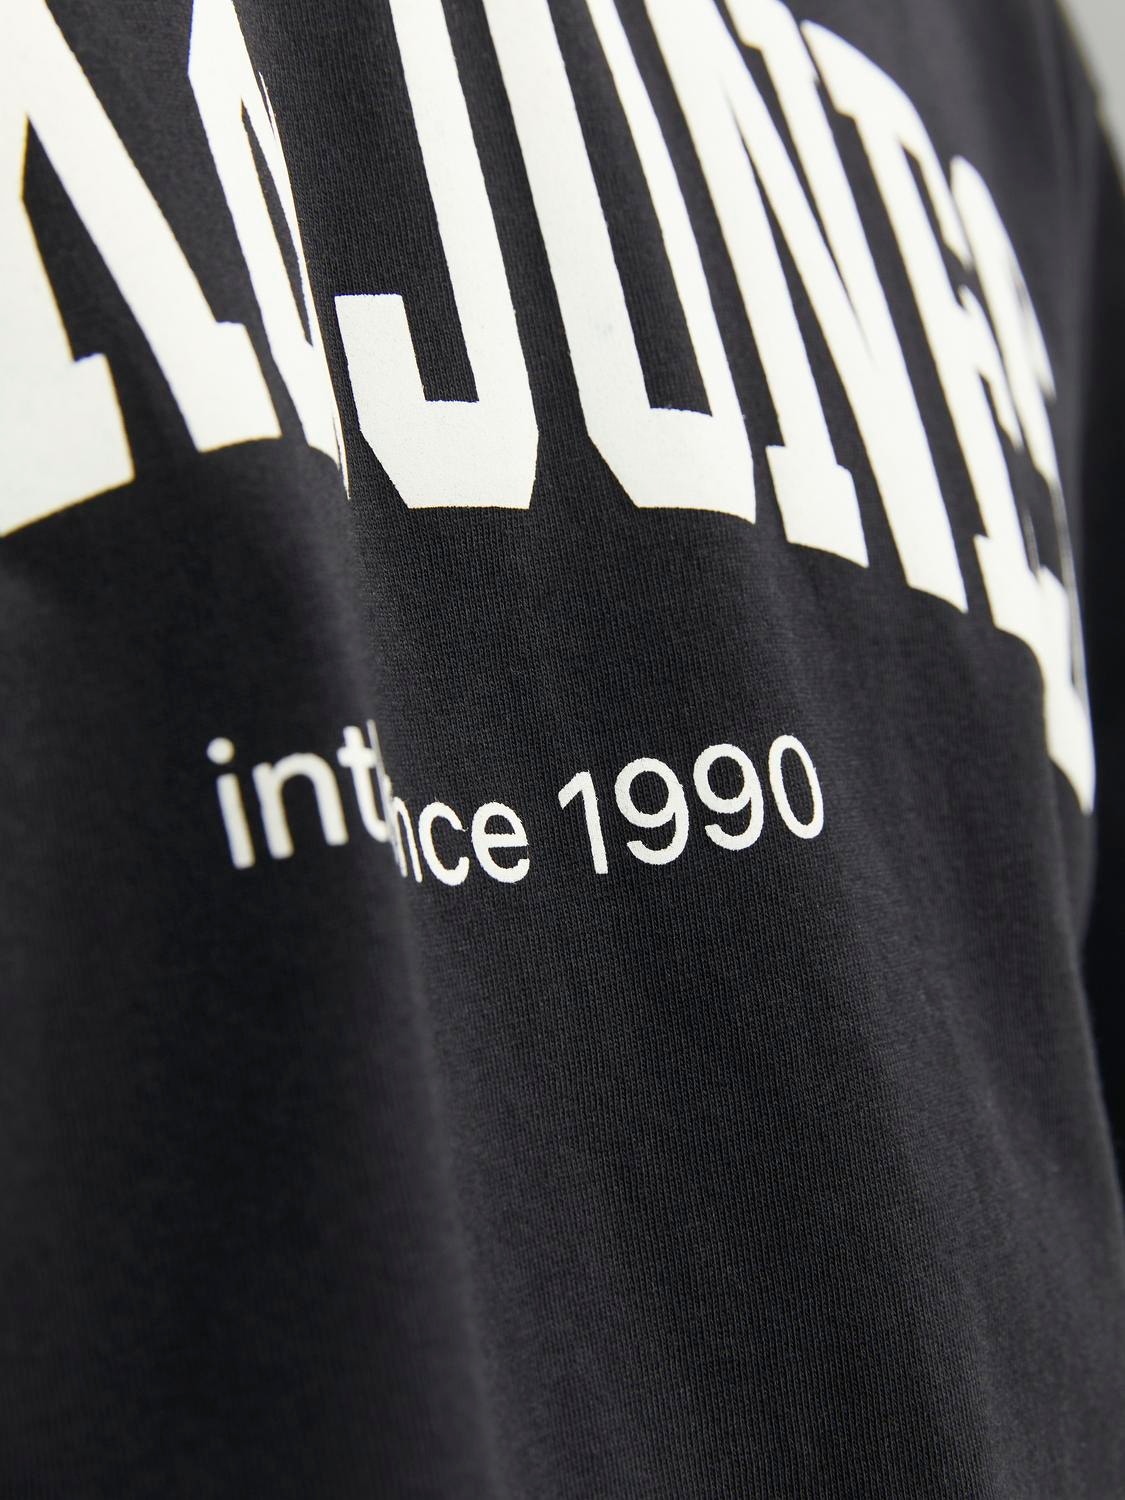 Jack & Jones Logo Crew neck T-shirt -Black - 12236514